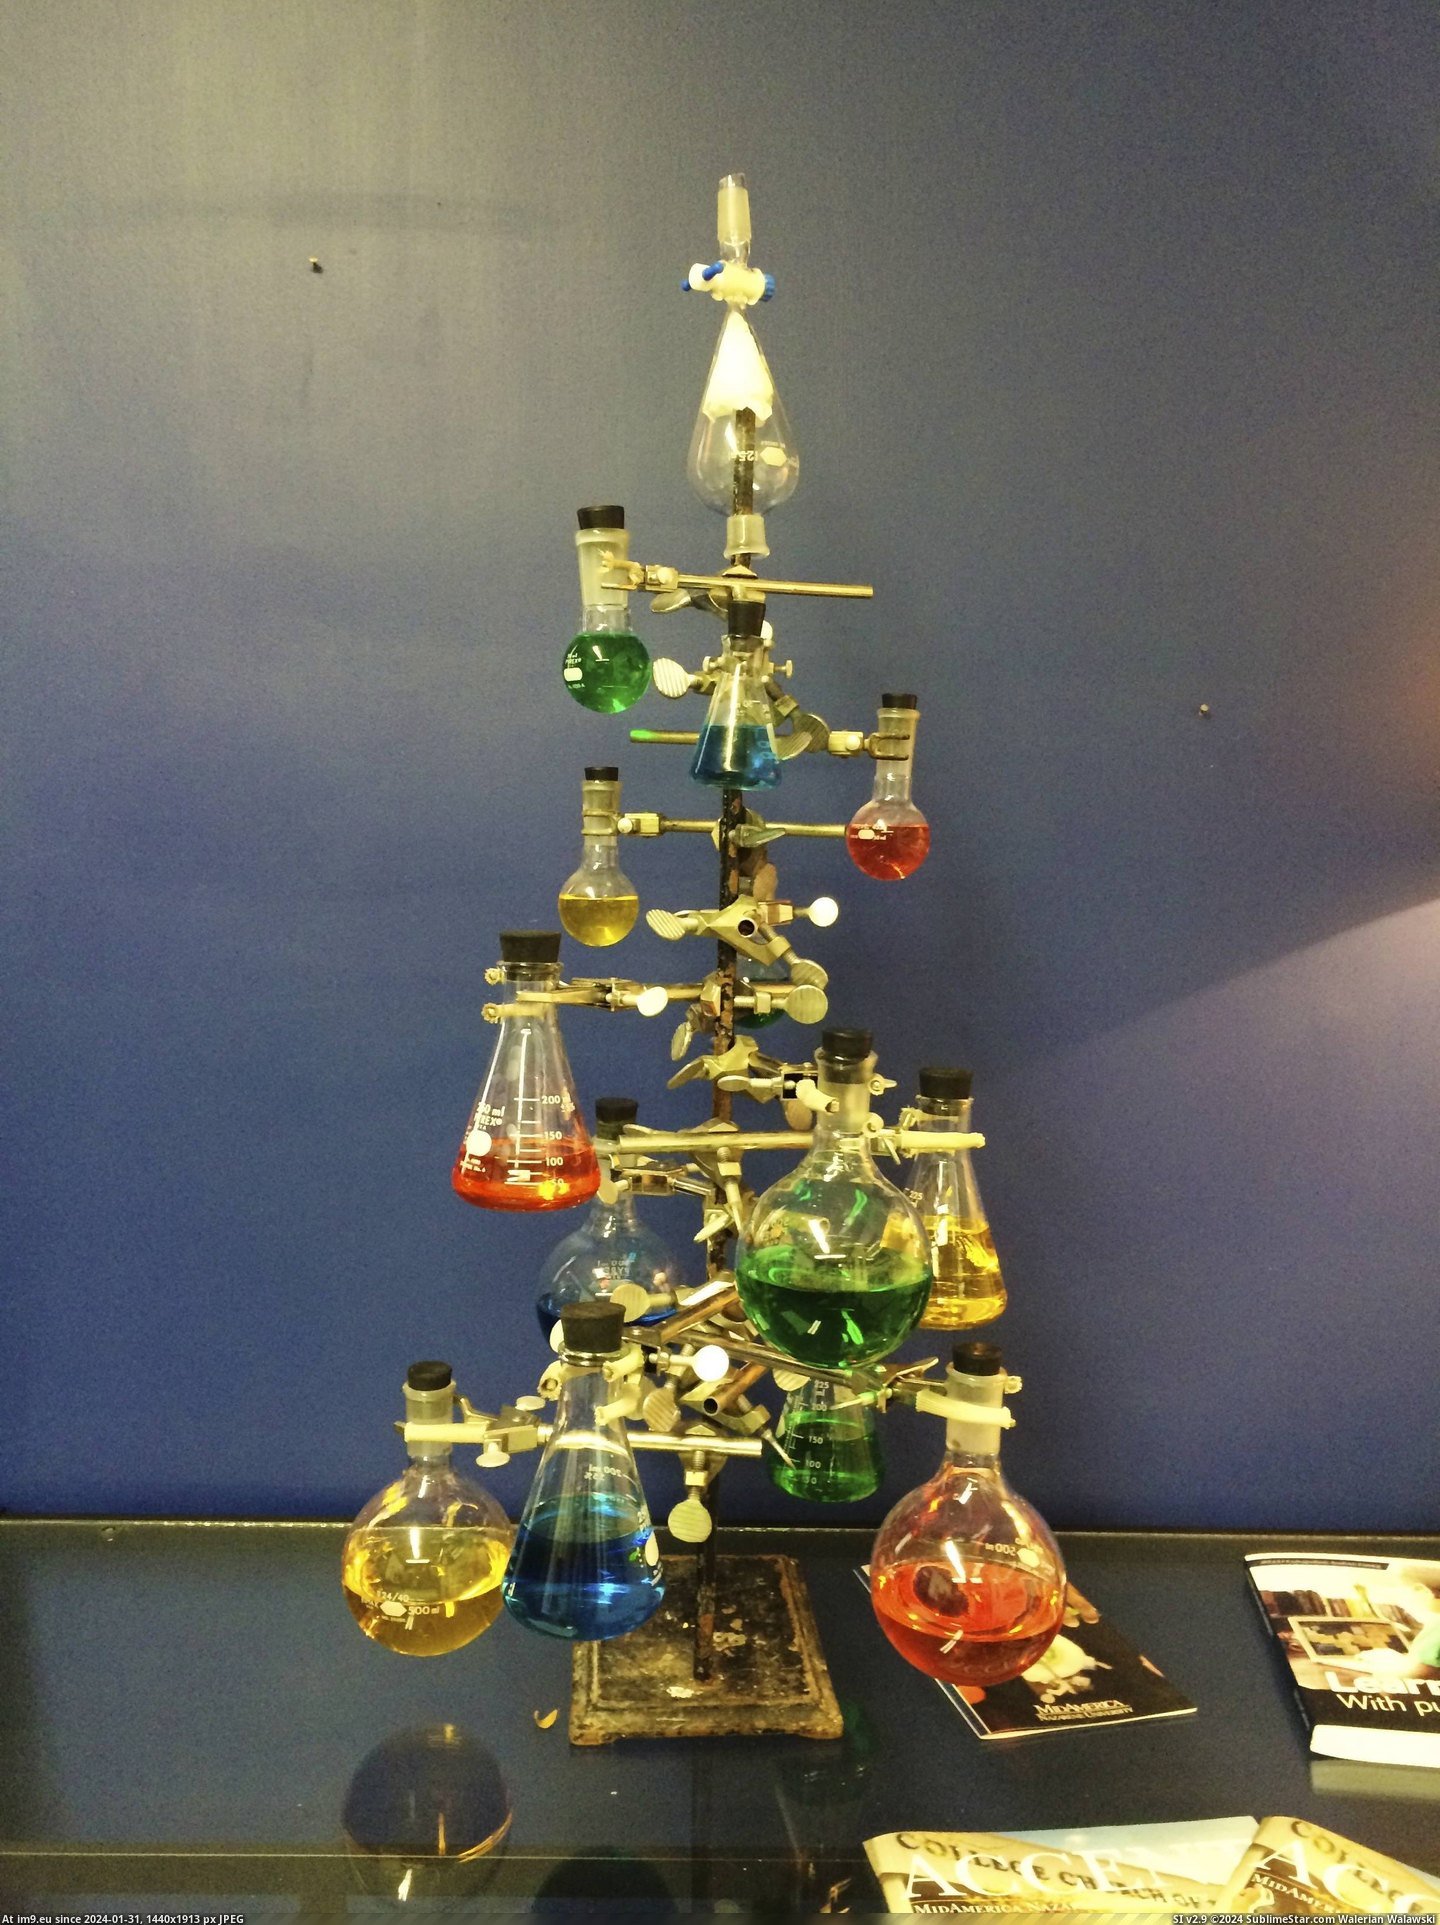 #For #Tree #Lab #Christmas [Pics] Christmas tree I made for my lab Pic. (Изображение из альбом My r/PICS favs))